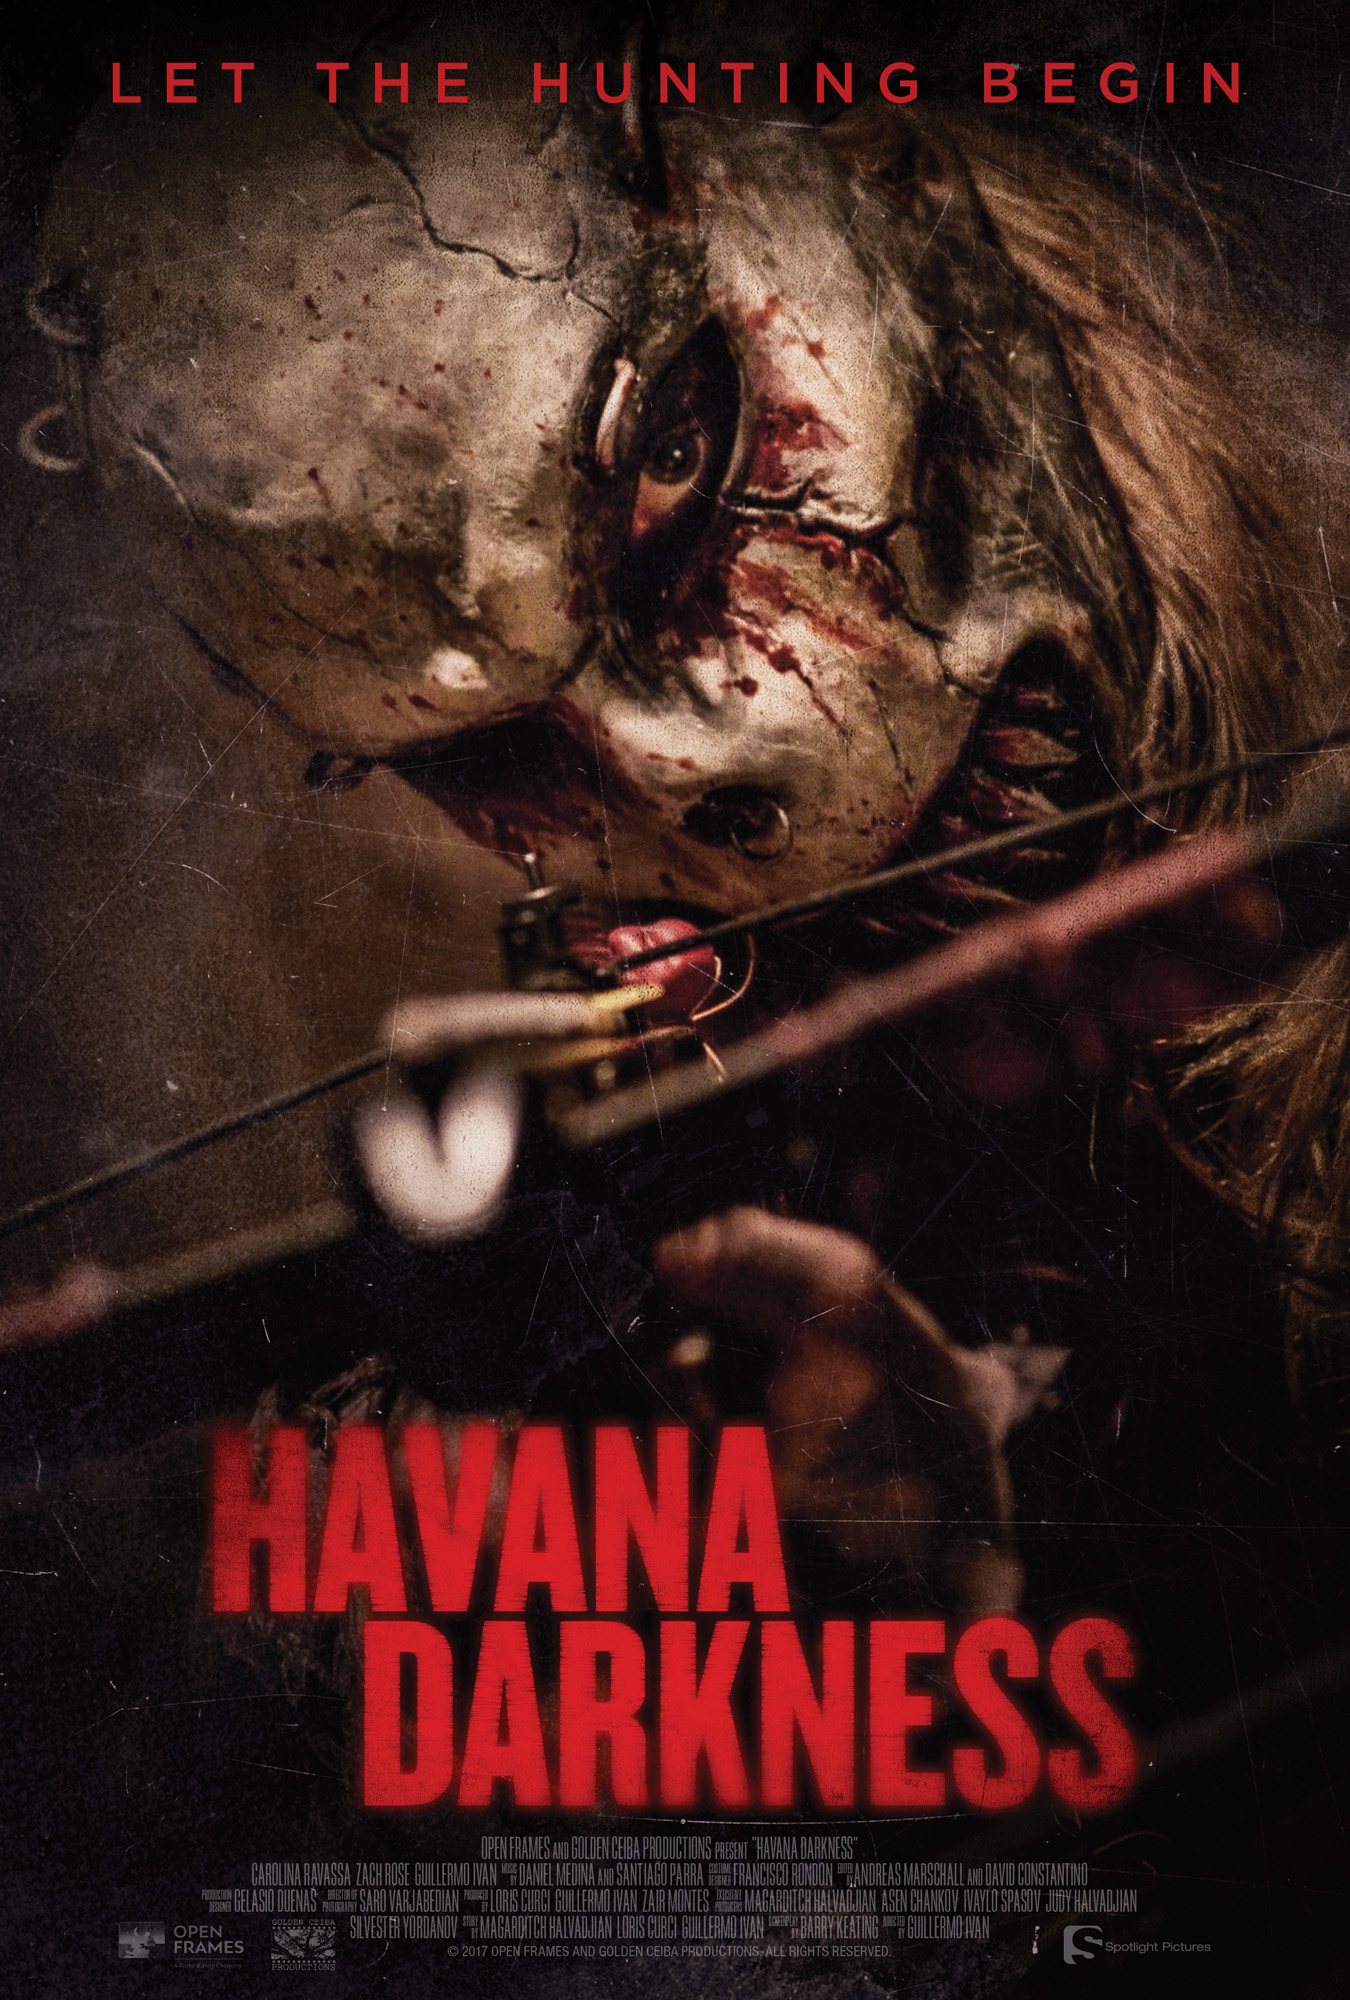 Nonton film Havana Darkness layarkaca21 indoxx1 ganool online streaming terbaru